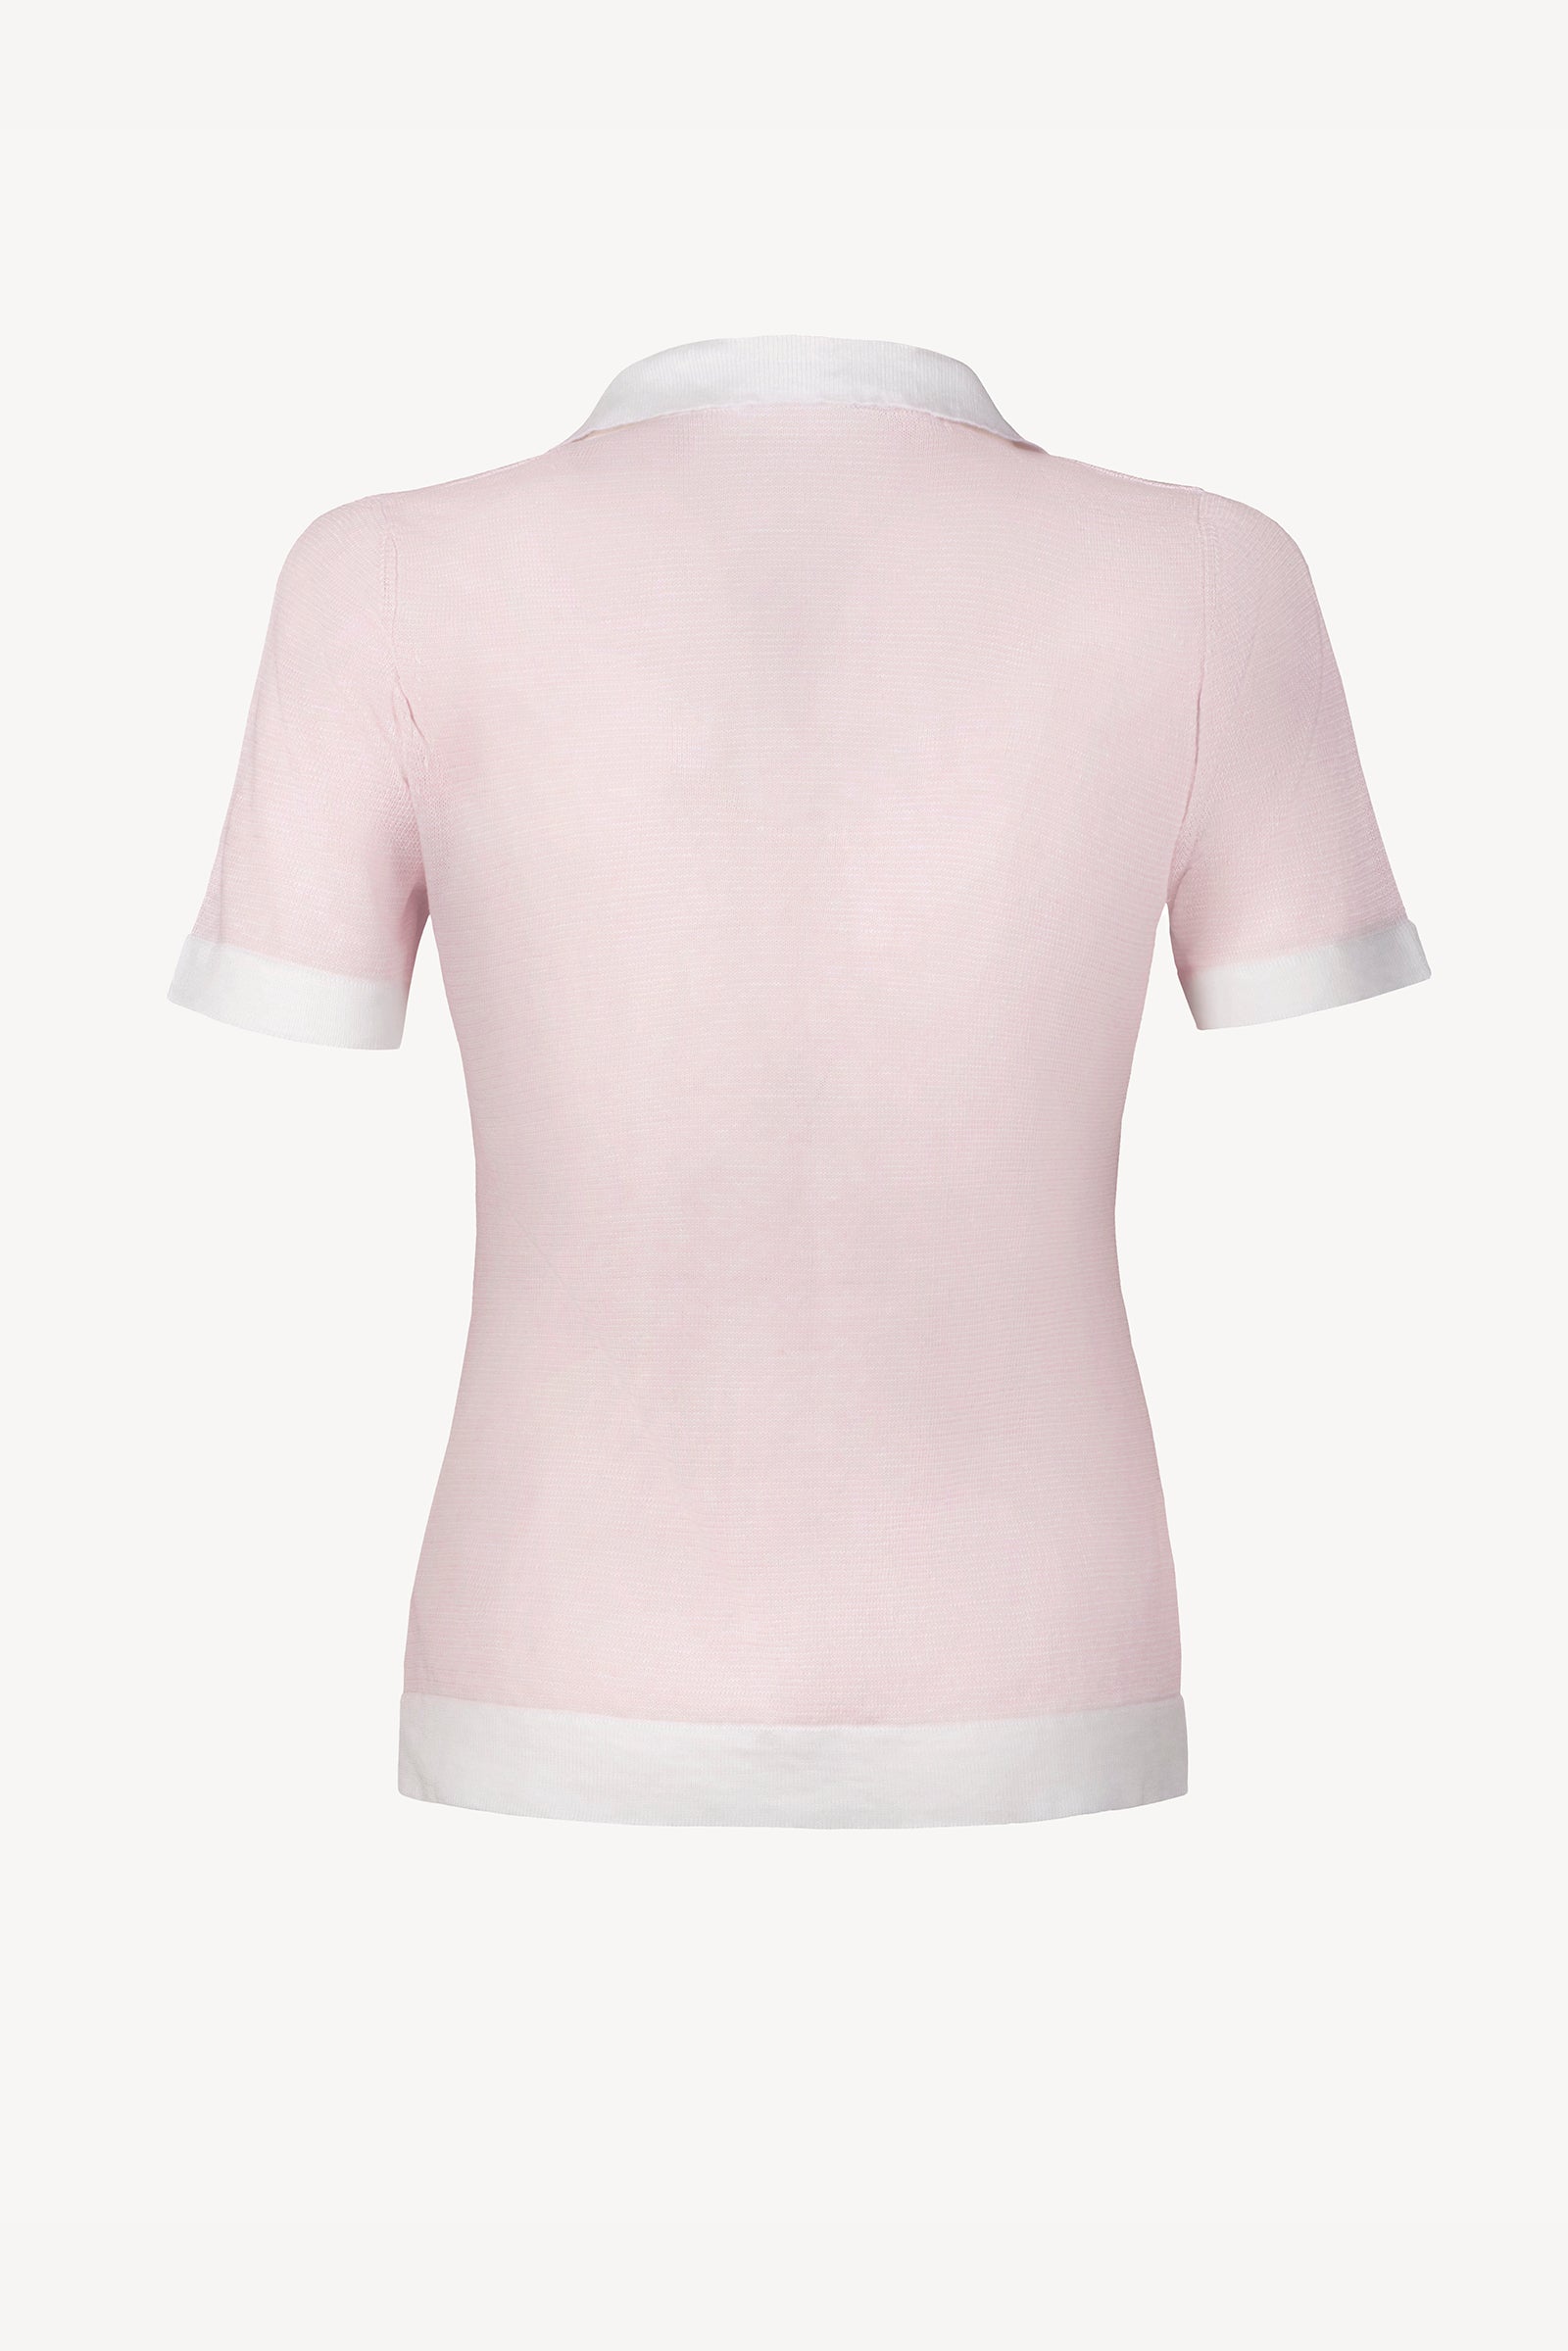 polo miami 100% Capri pink and white linen polo back